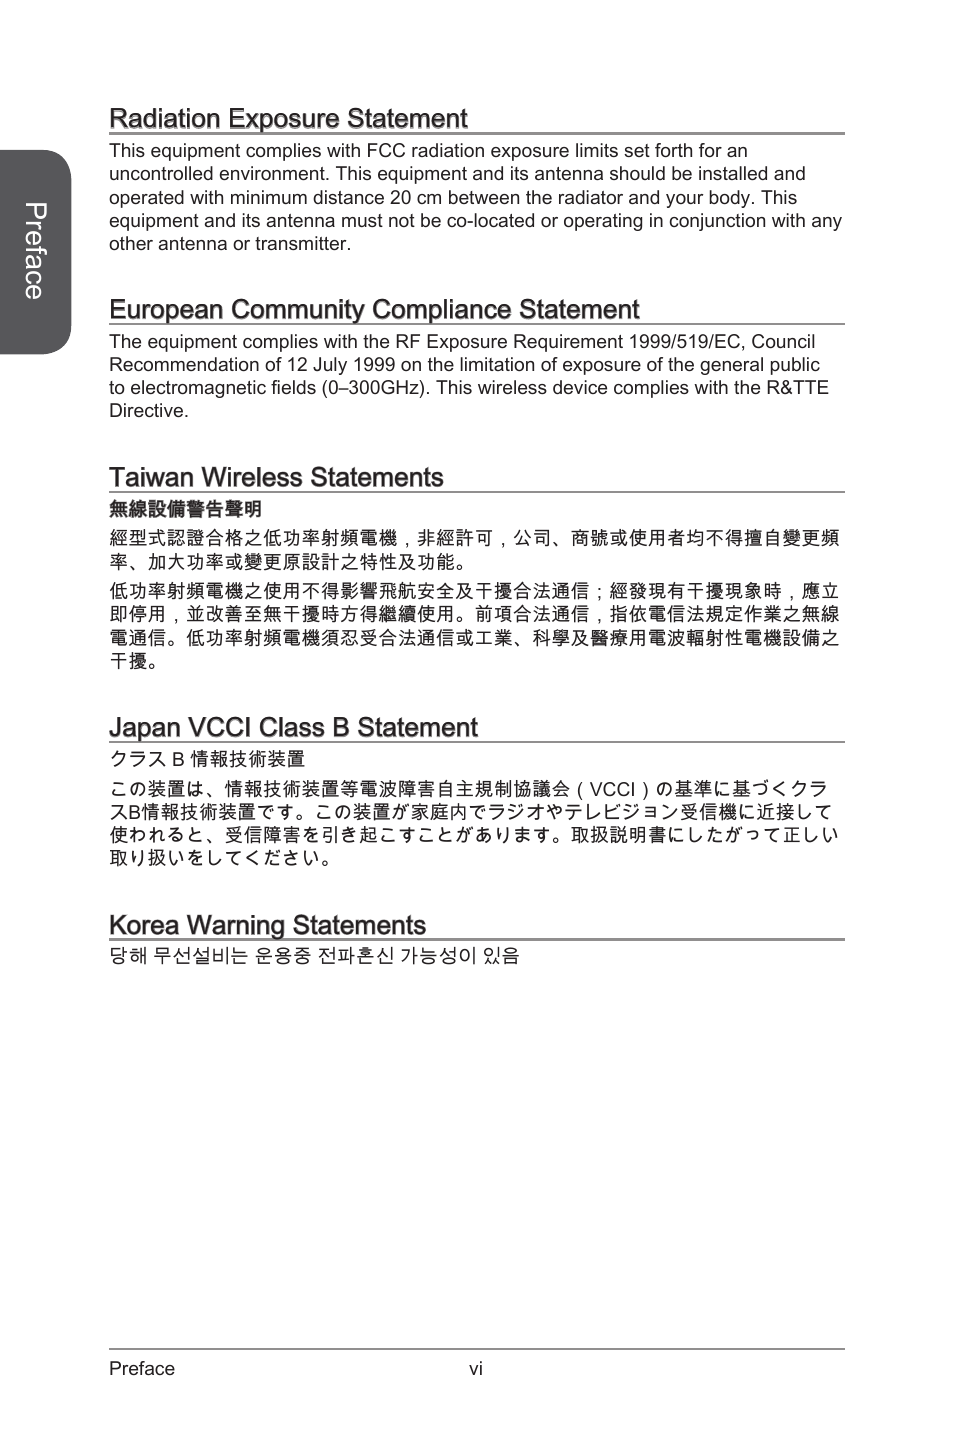 Preface, Radiation exposure statement, European community compliance